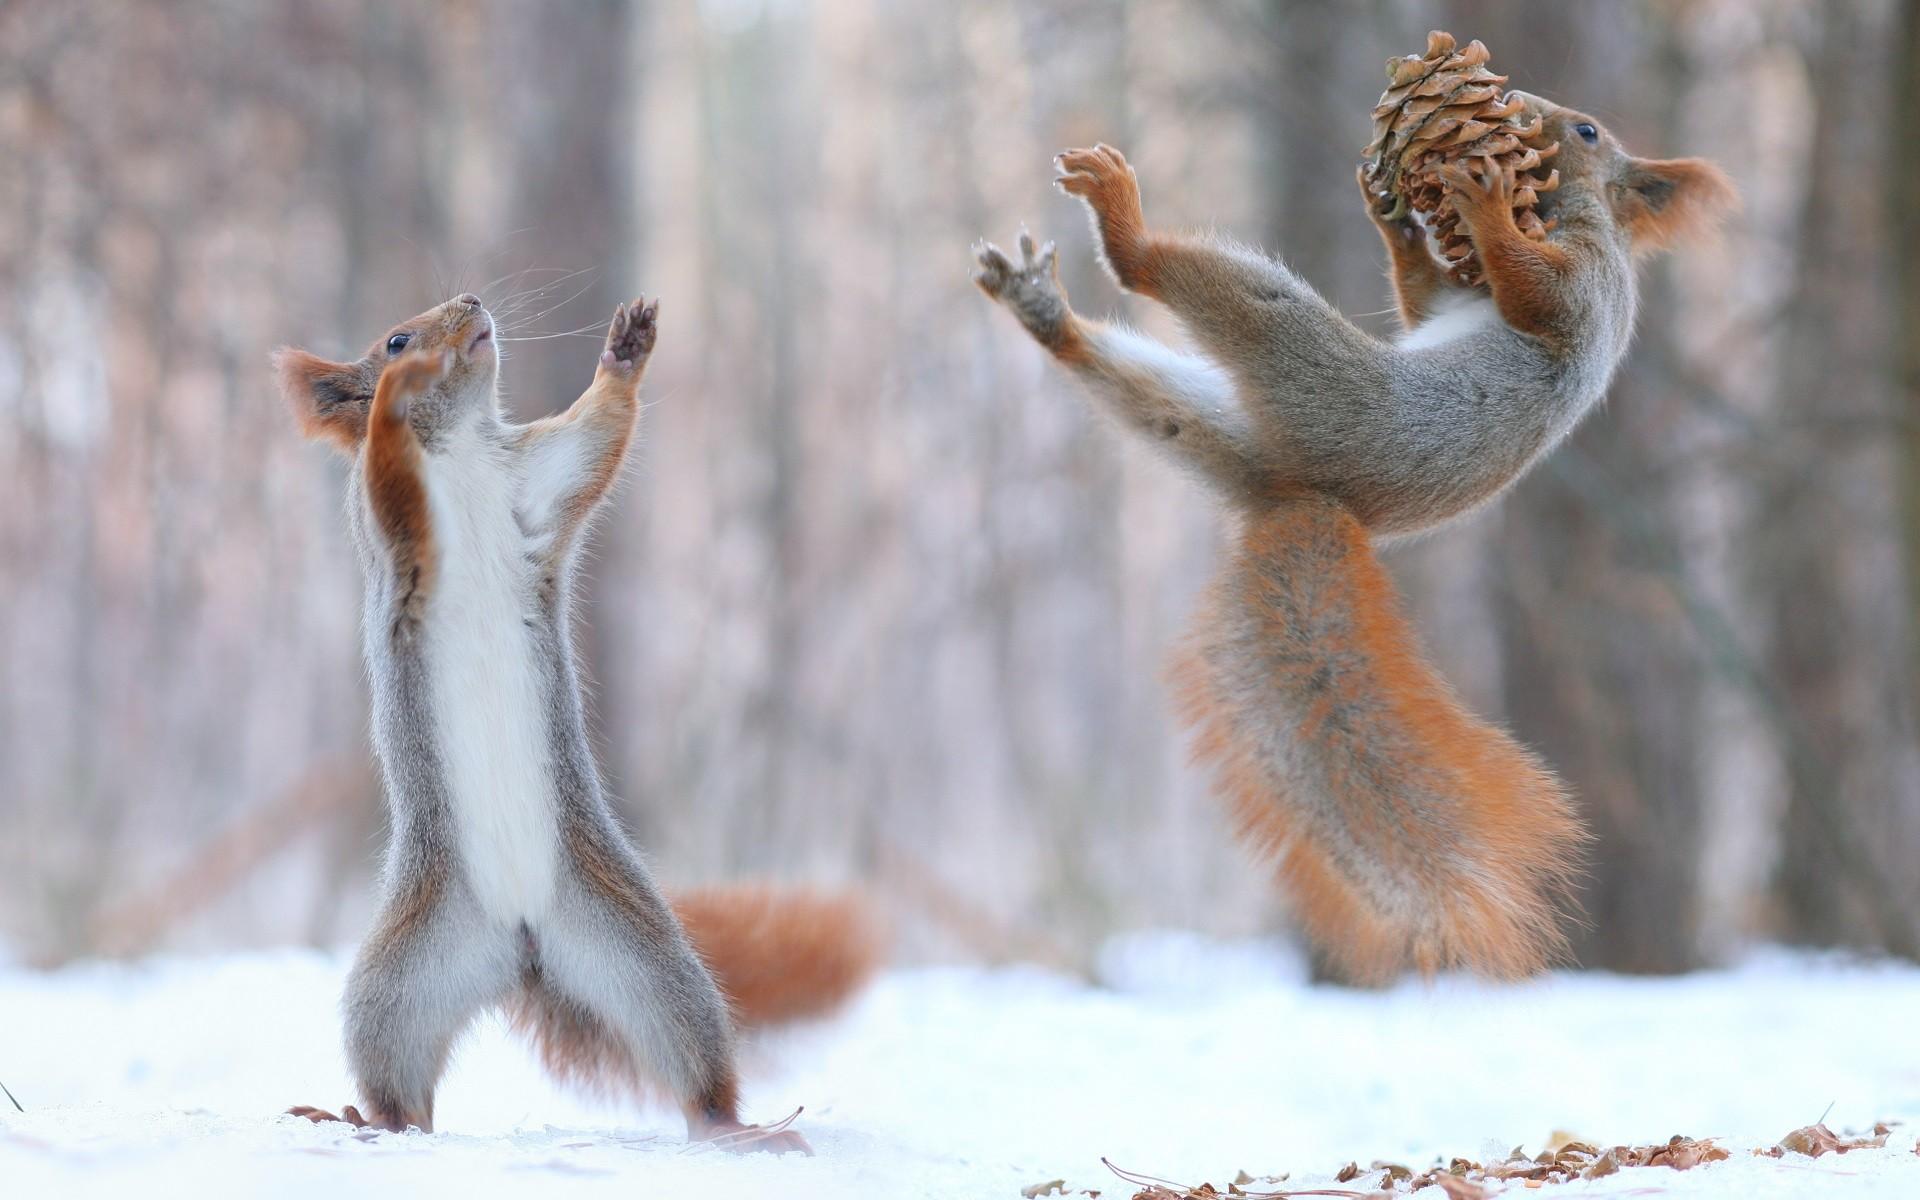 #force, #snow, #winter, #animals, #squirrel, #nature